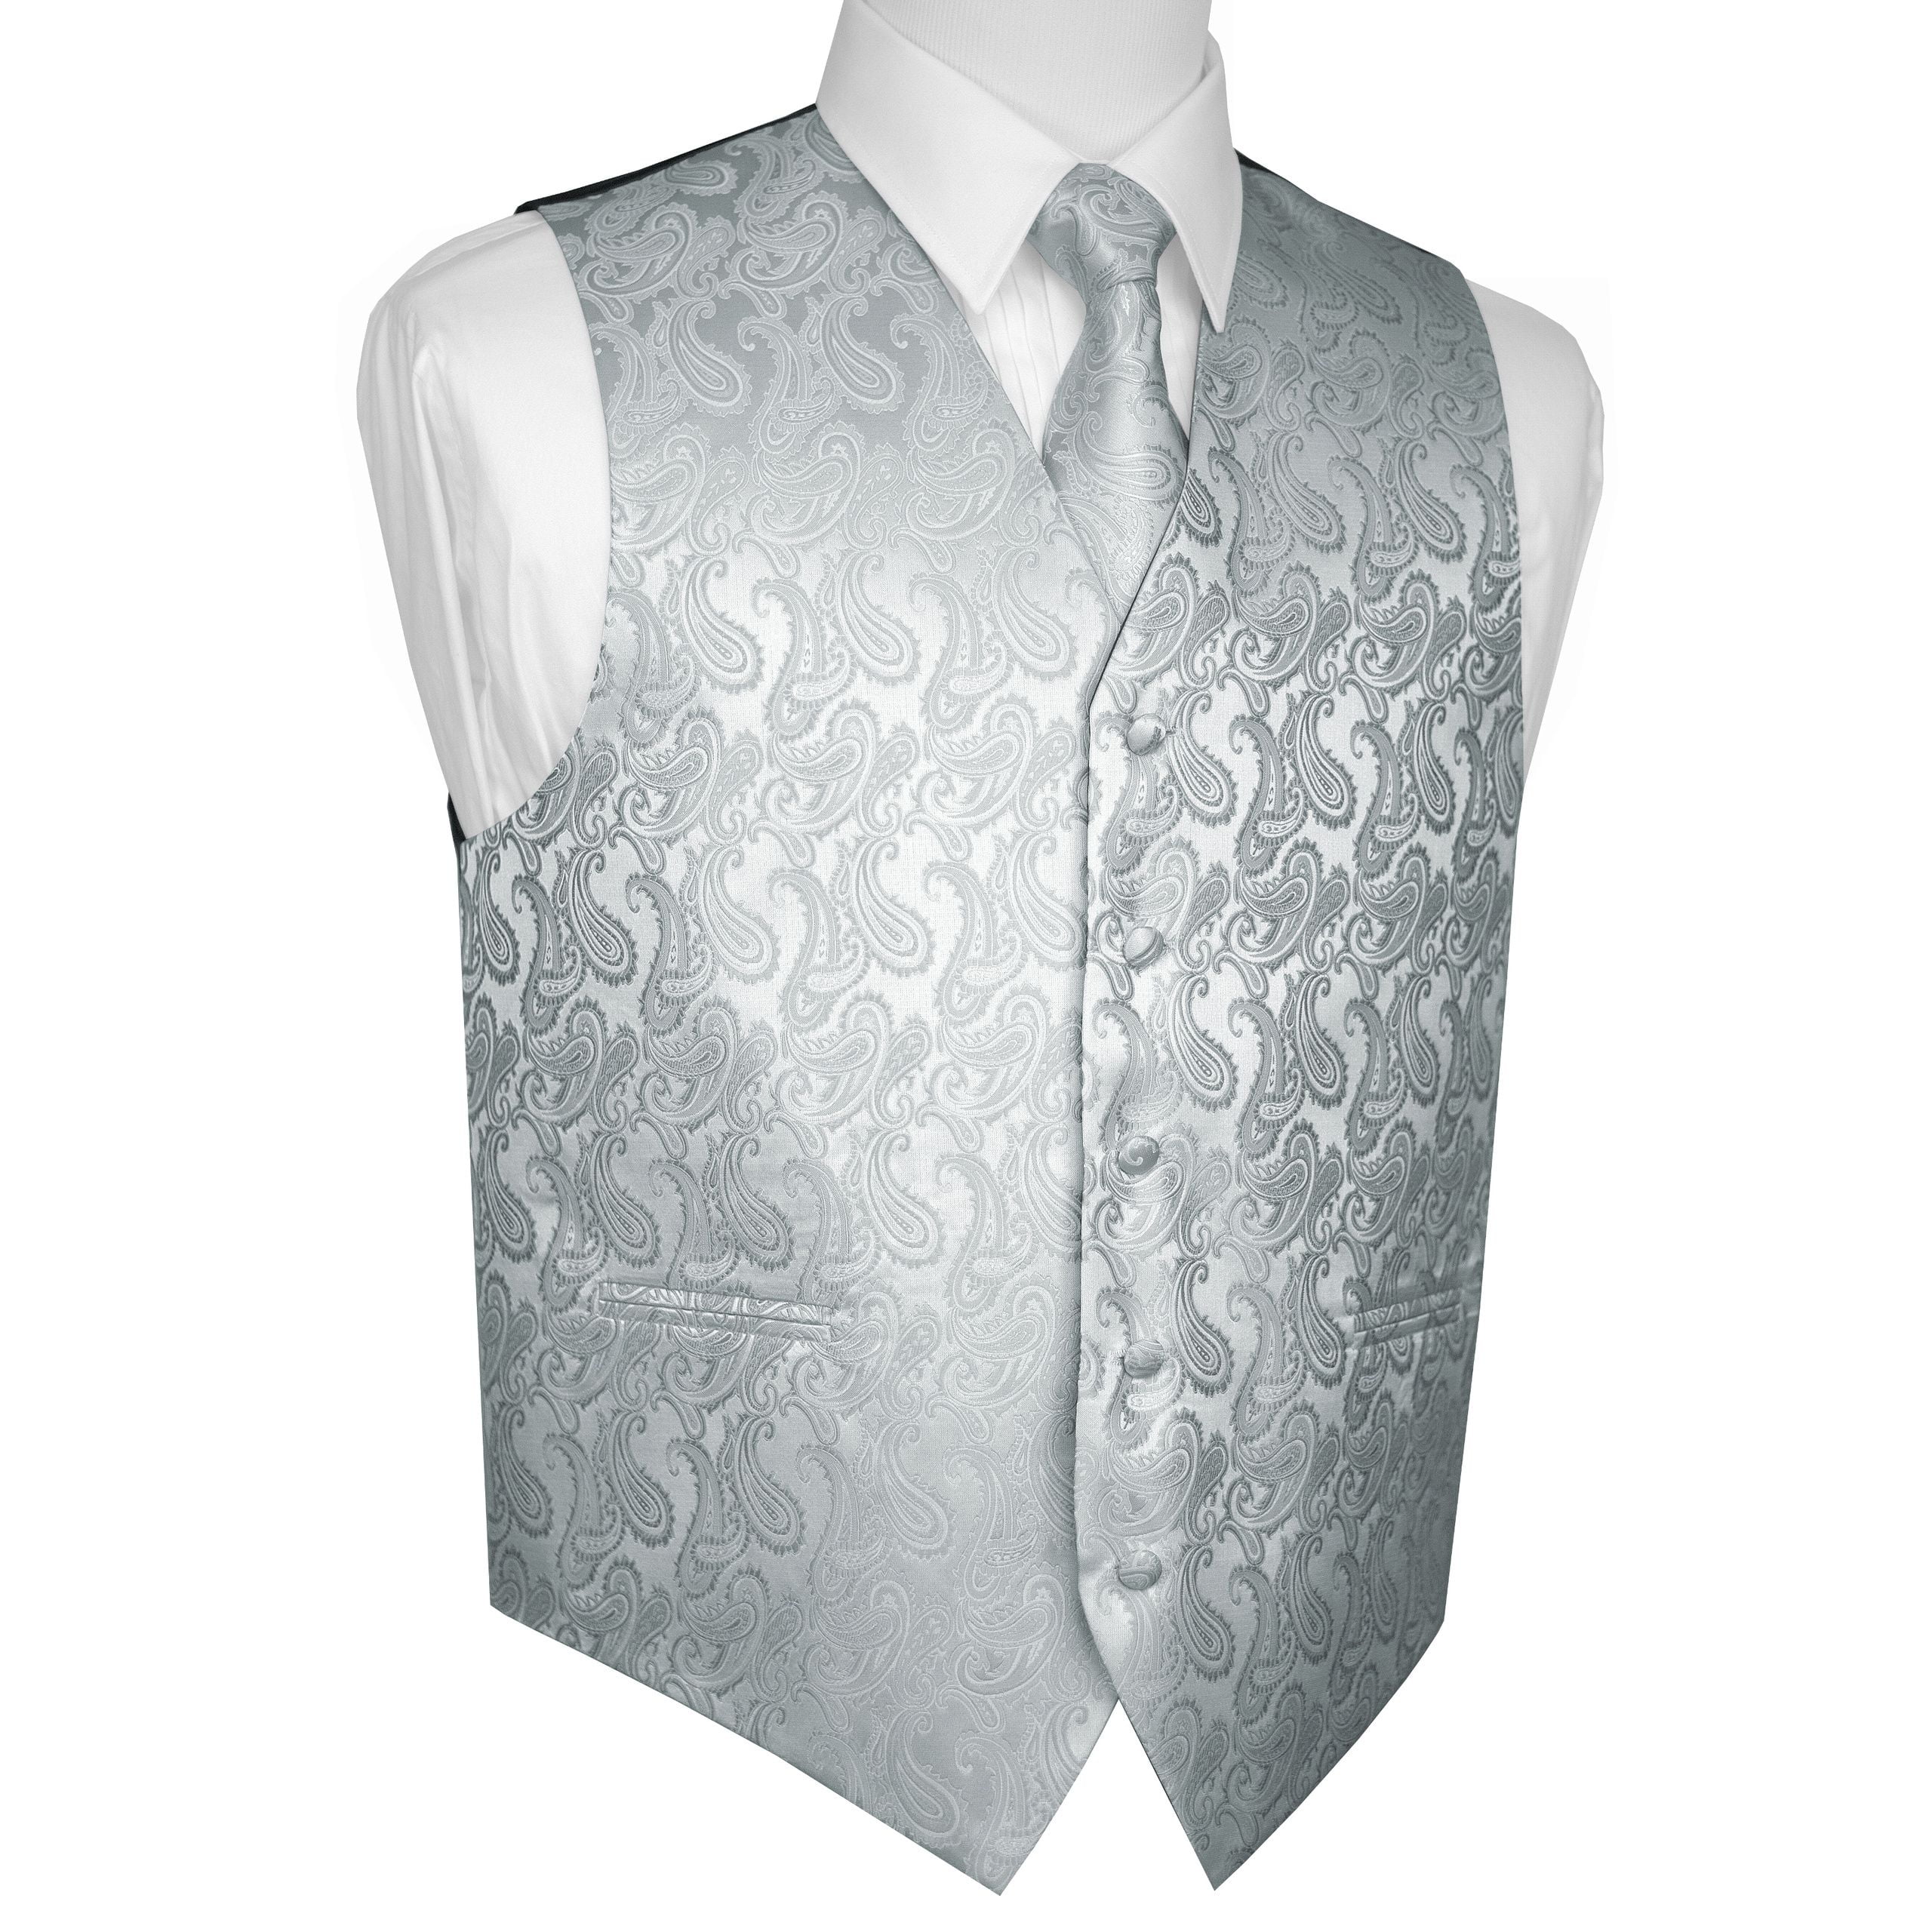 Lot of 12 classic men Necktie only paisley pattern formal wedding uniform Black